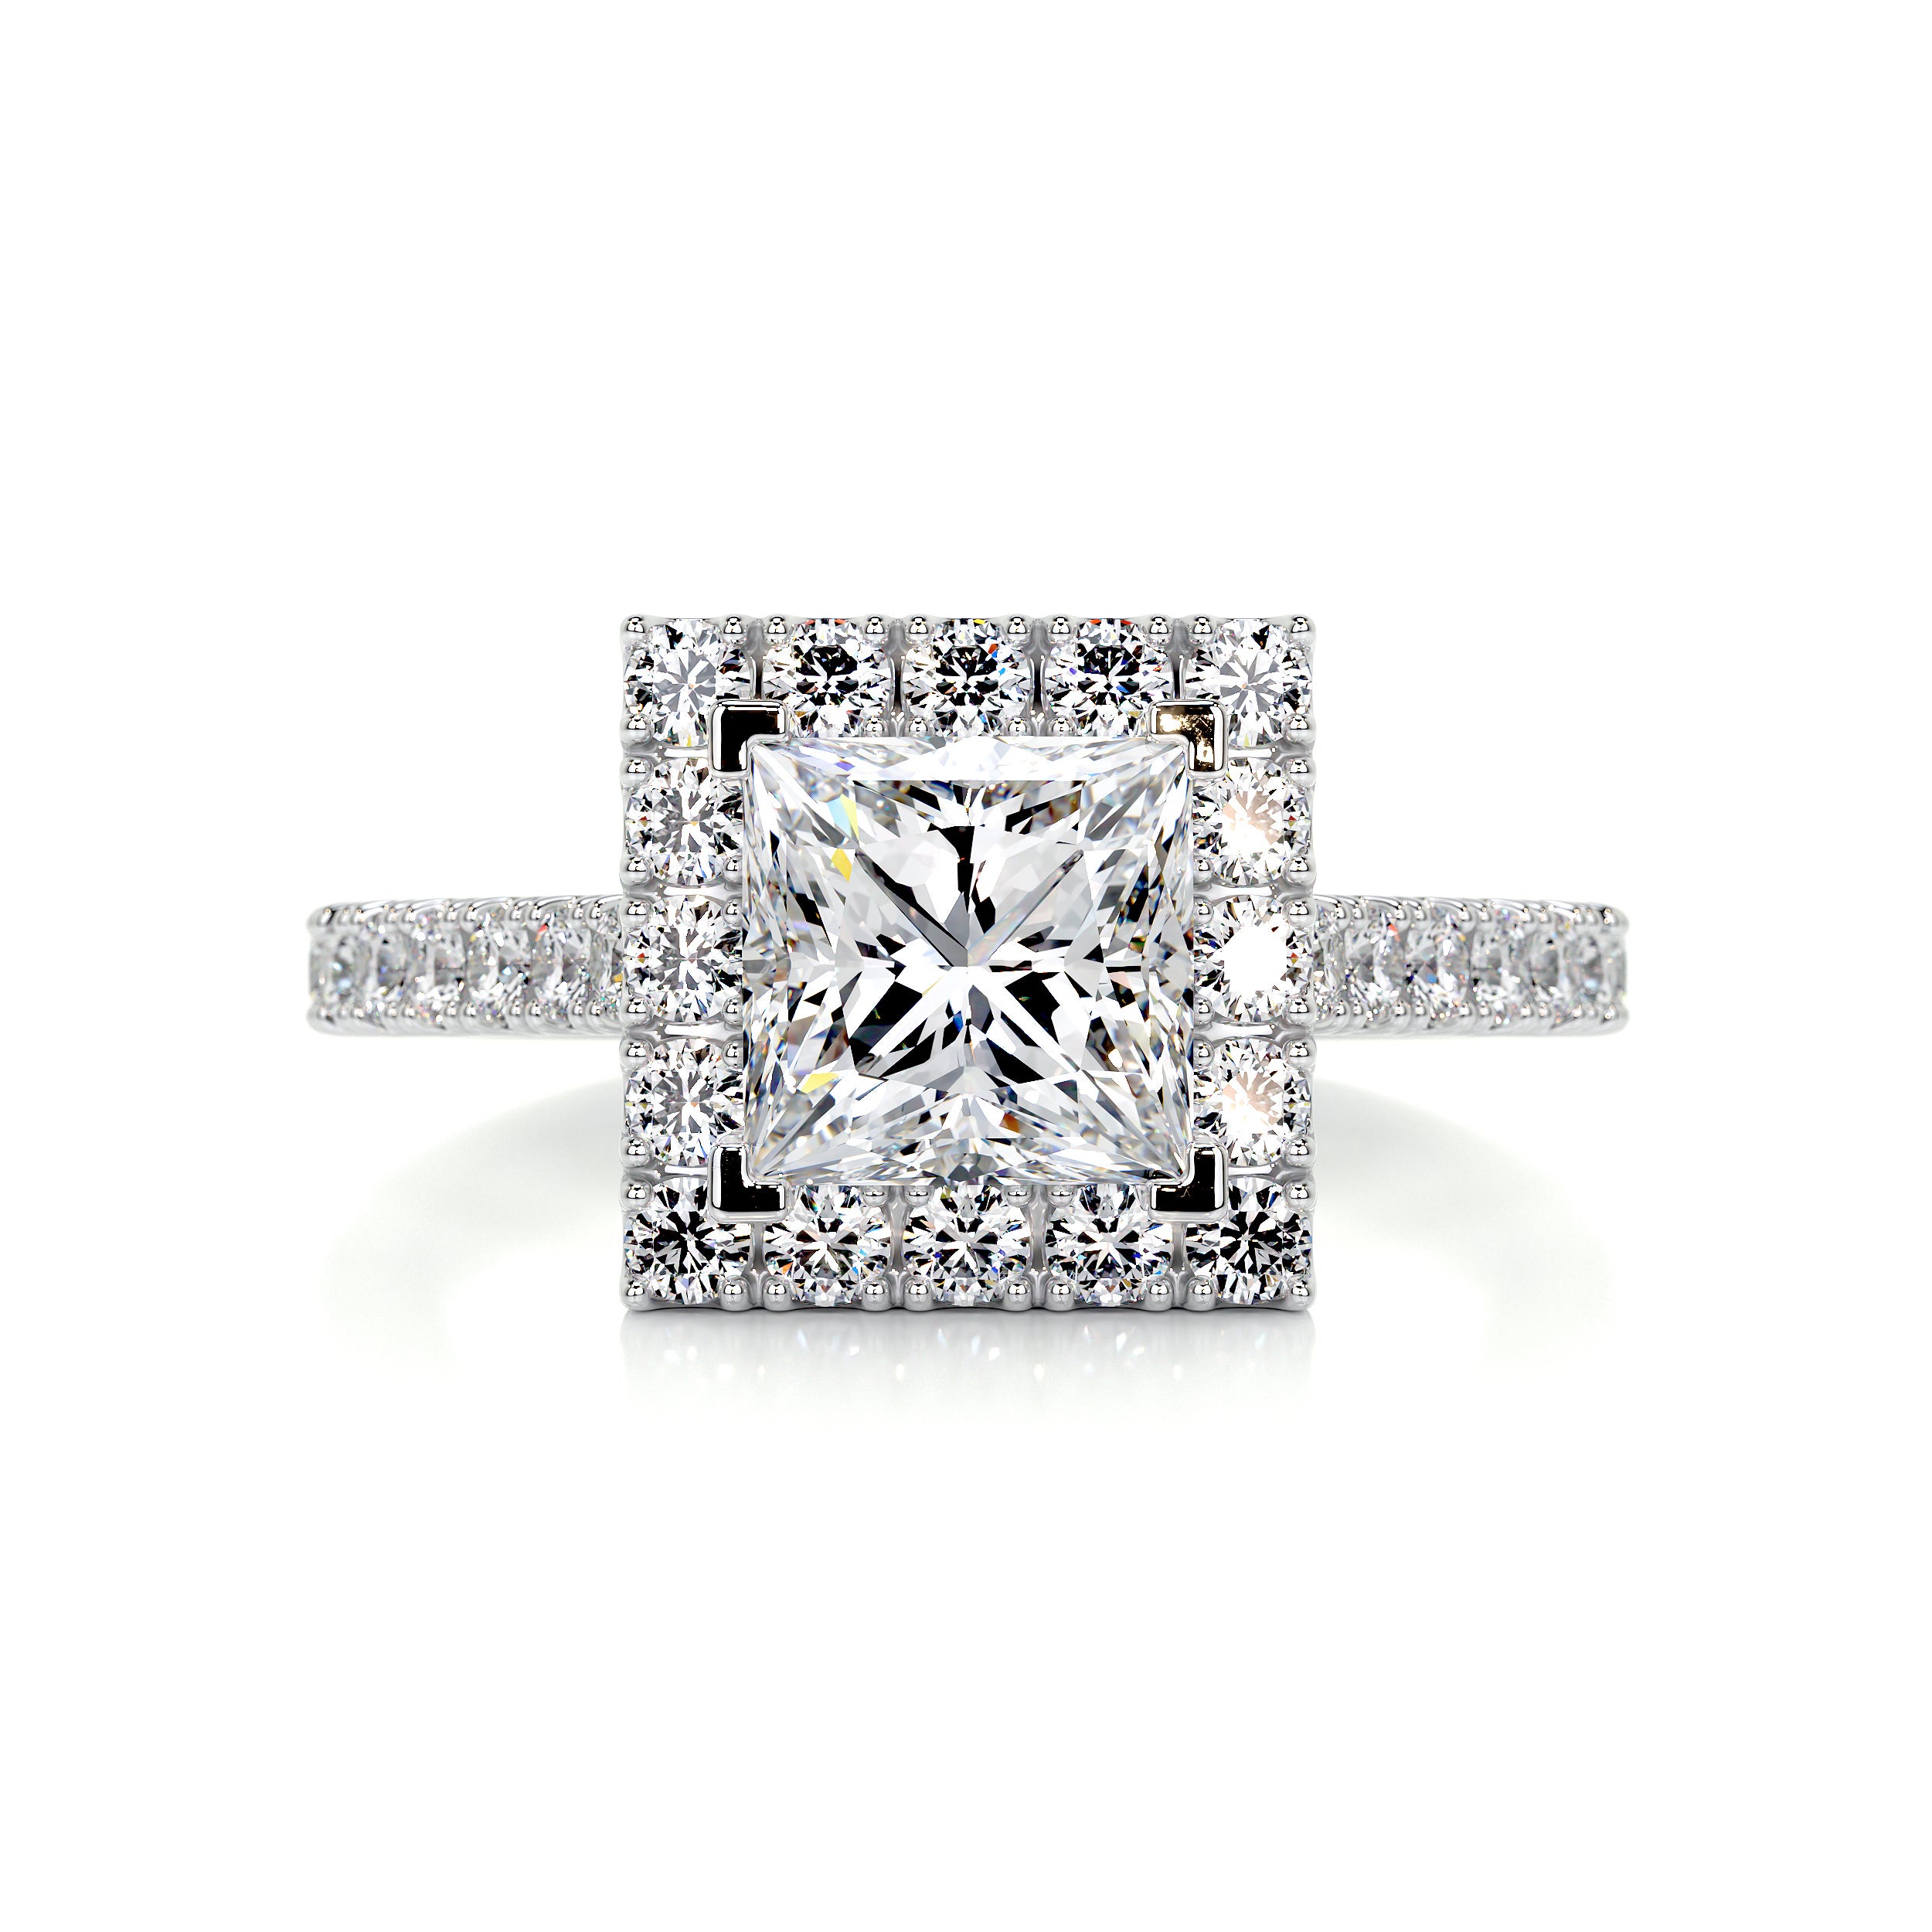 Patricia Diamond Engagement Ring   (2.5 Carat) -14K White Gold